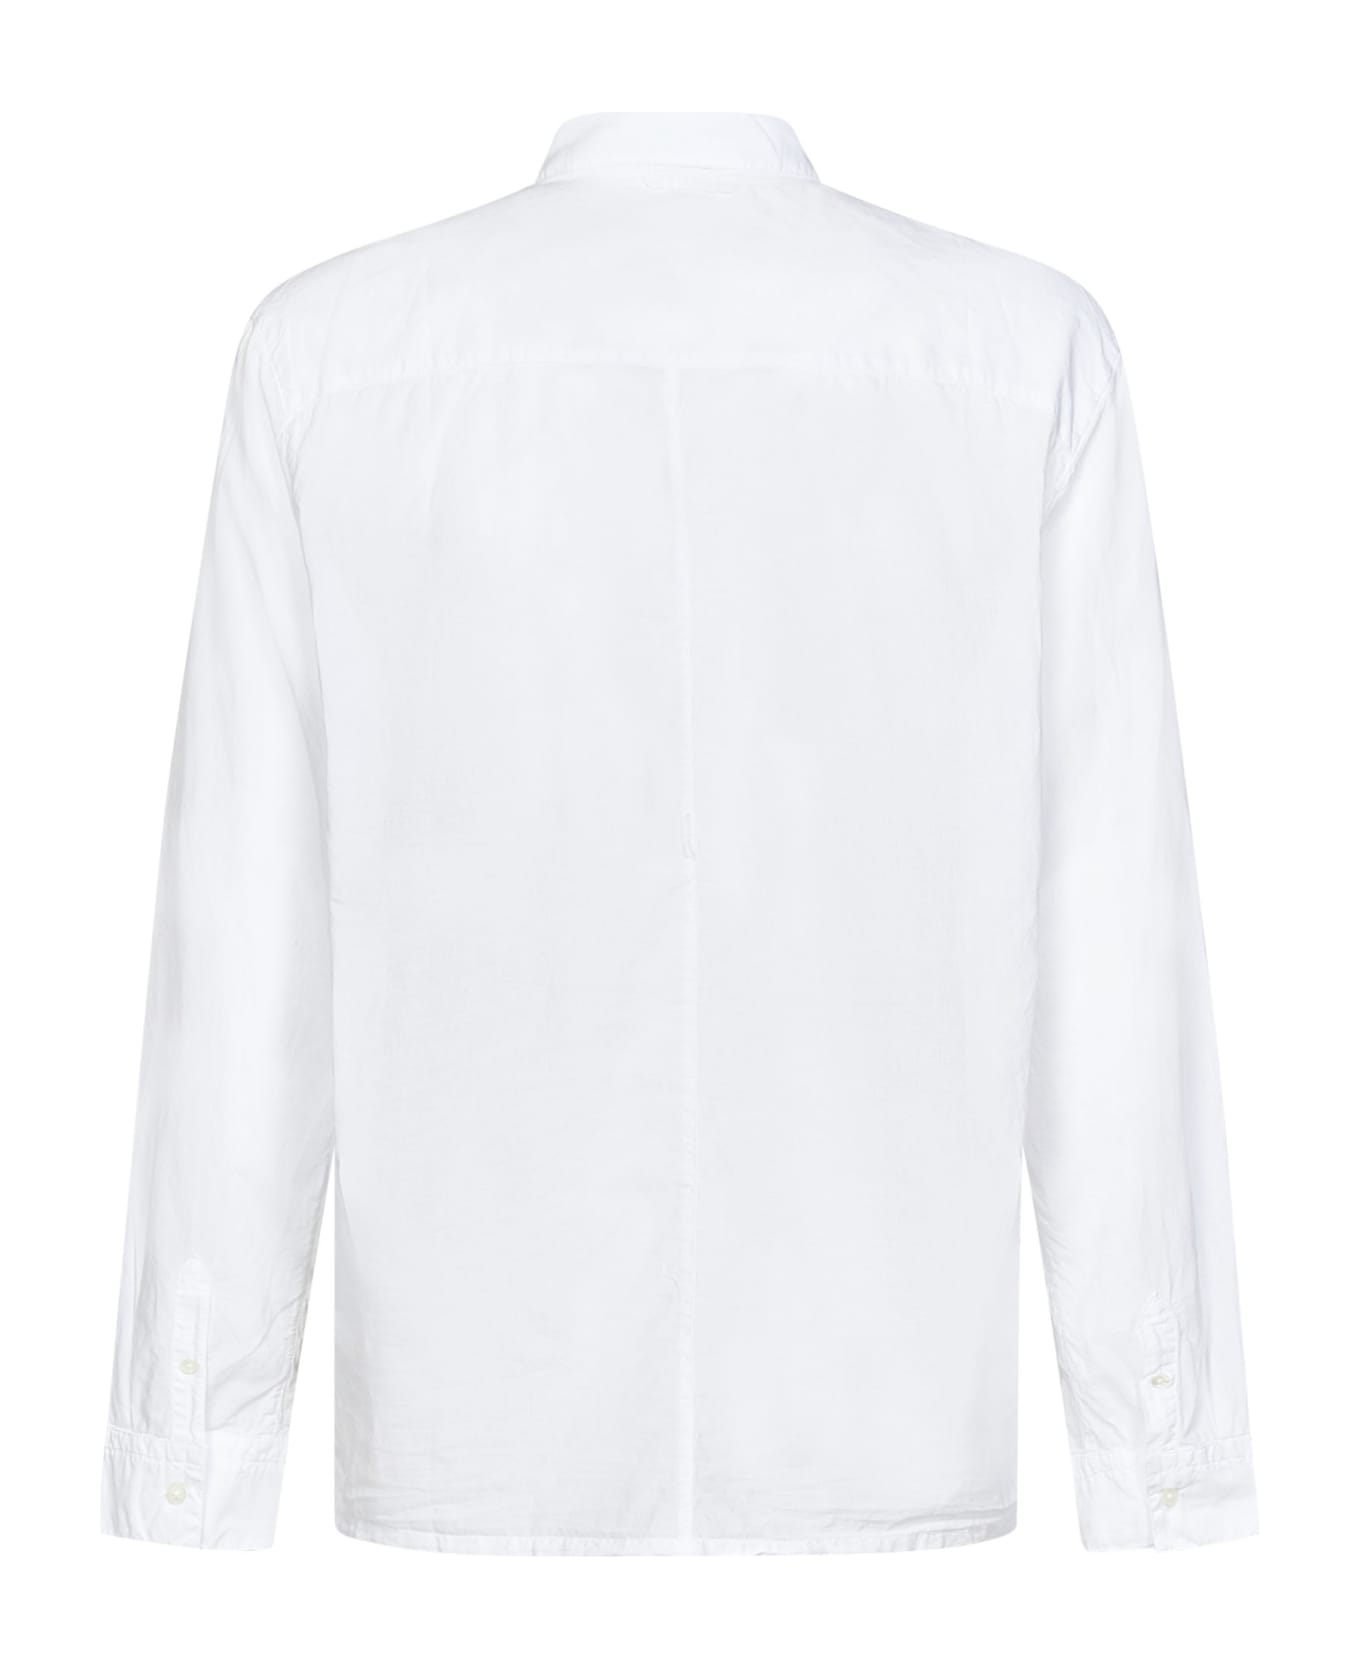 James Perse Shirt - White シャツ